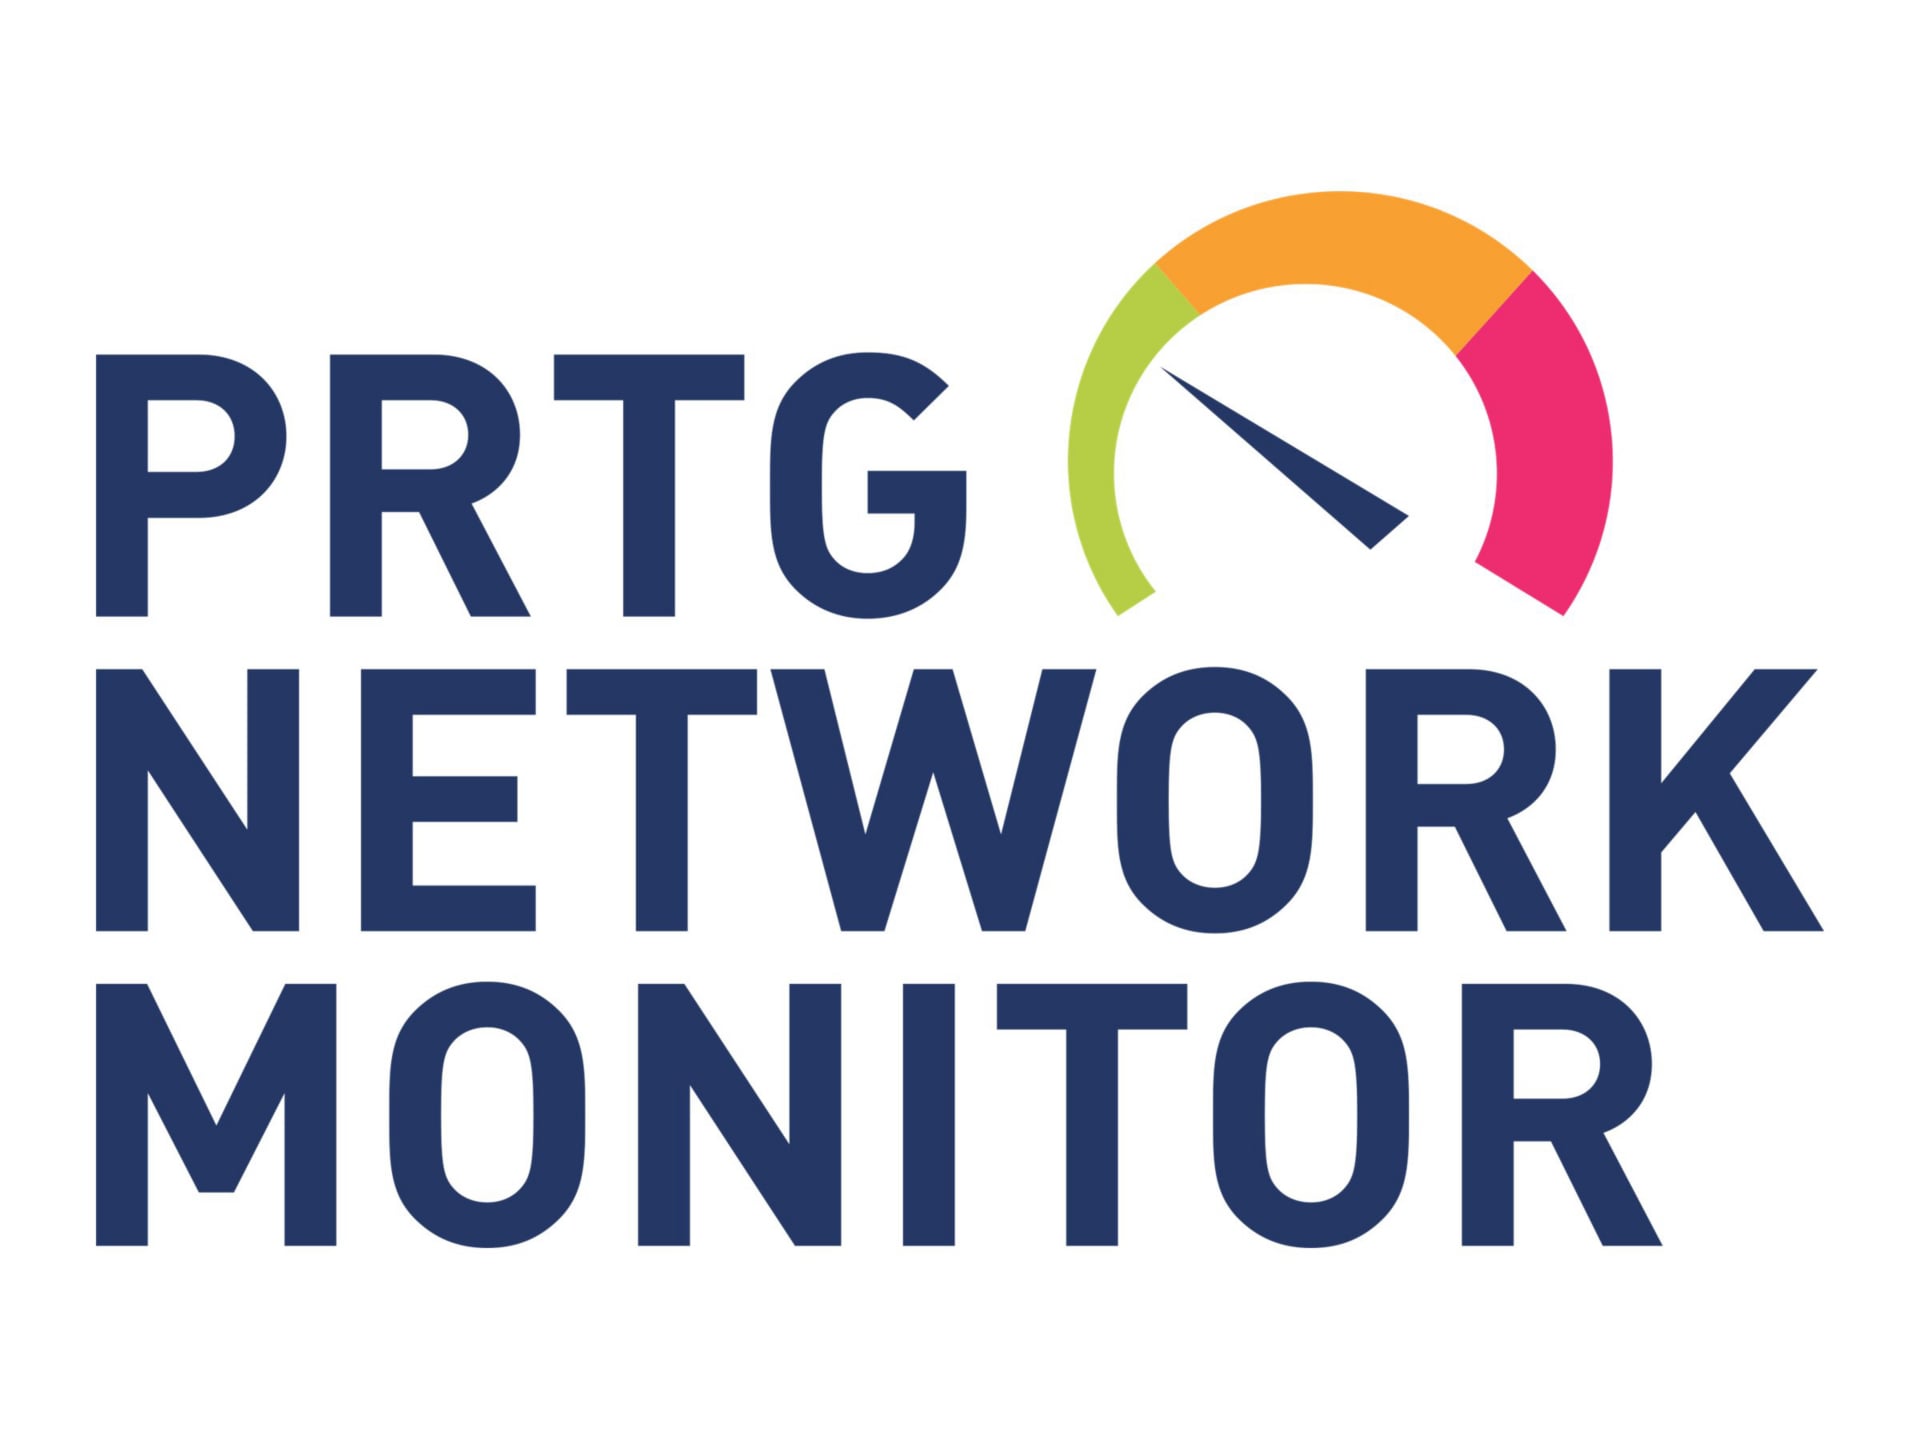 PRTG Network Monitor - license + 3 Years Maintenance - 2500 sensors